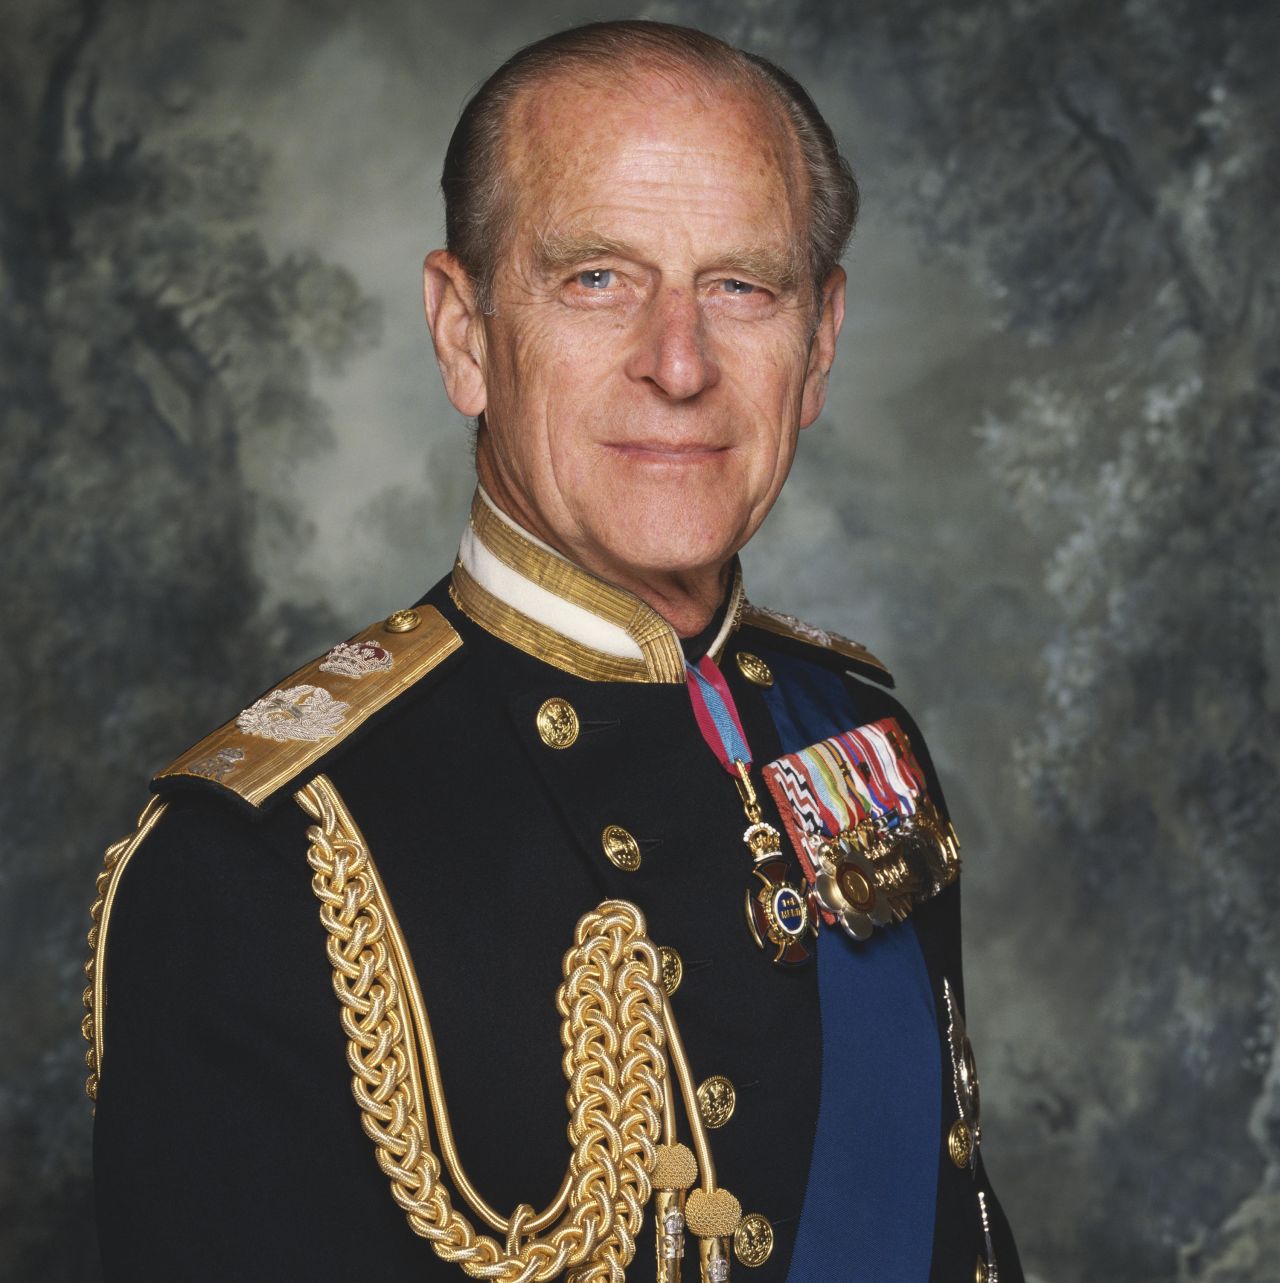 Britain's Prince Philip, the Duke of Edinburgh, poses in his military dress uniform circa 1990.